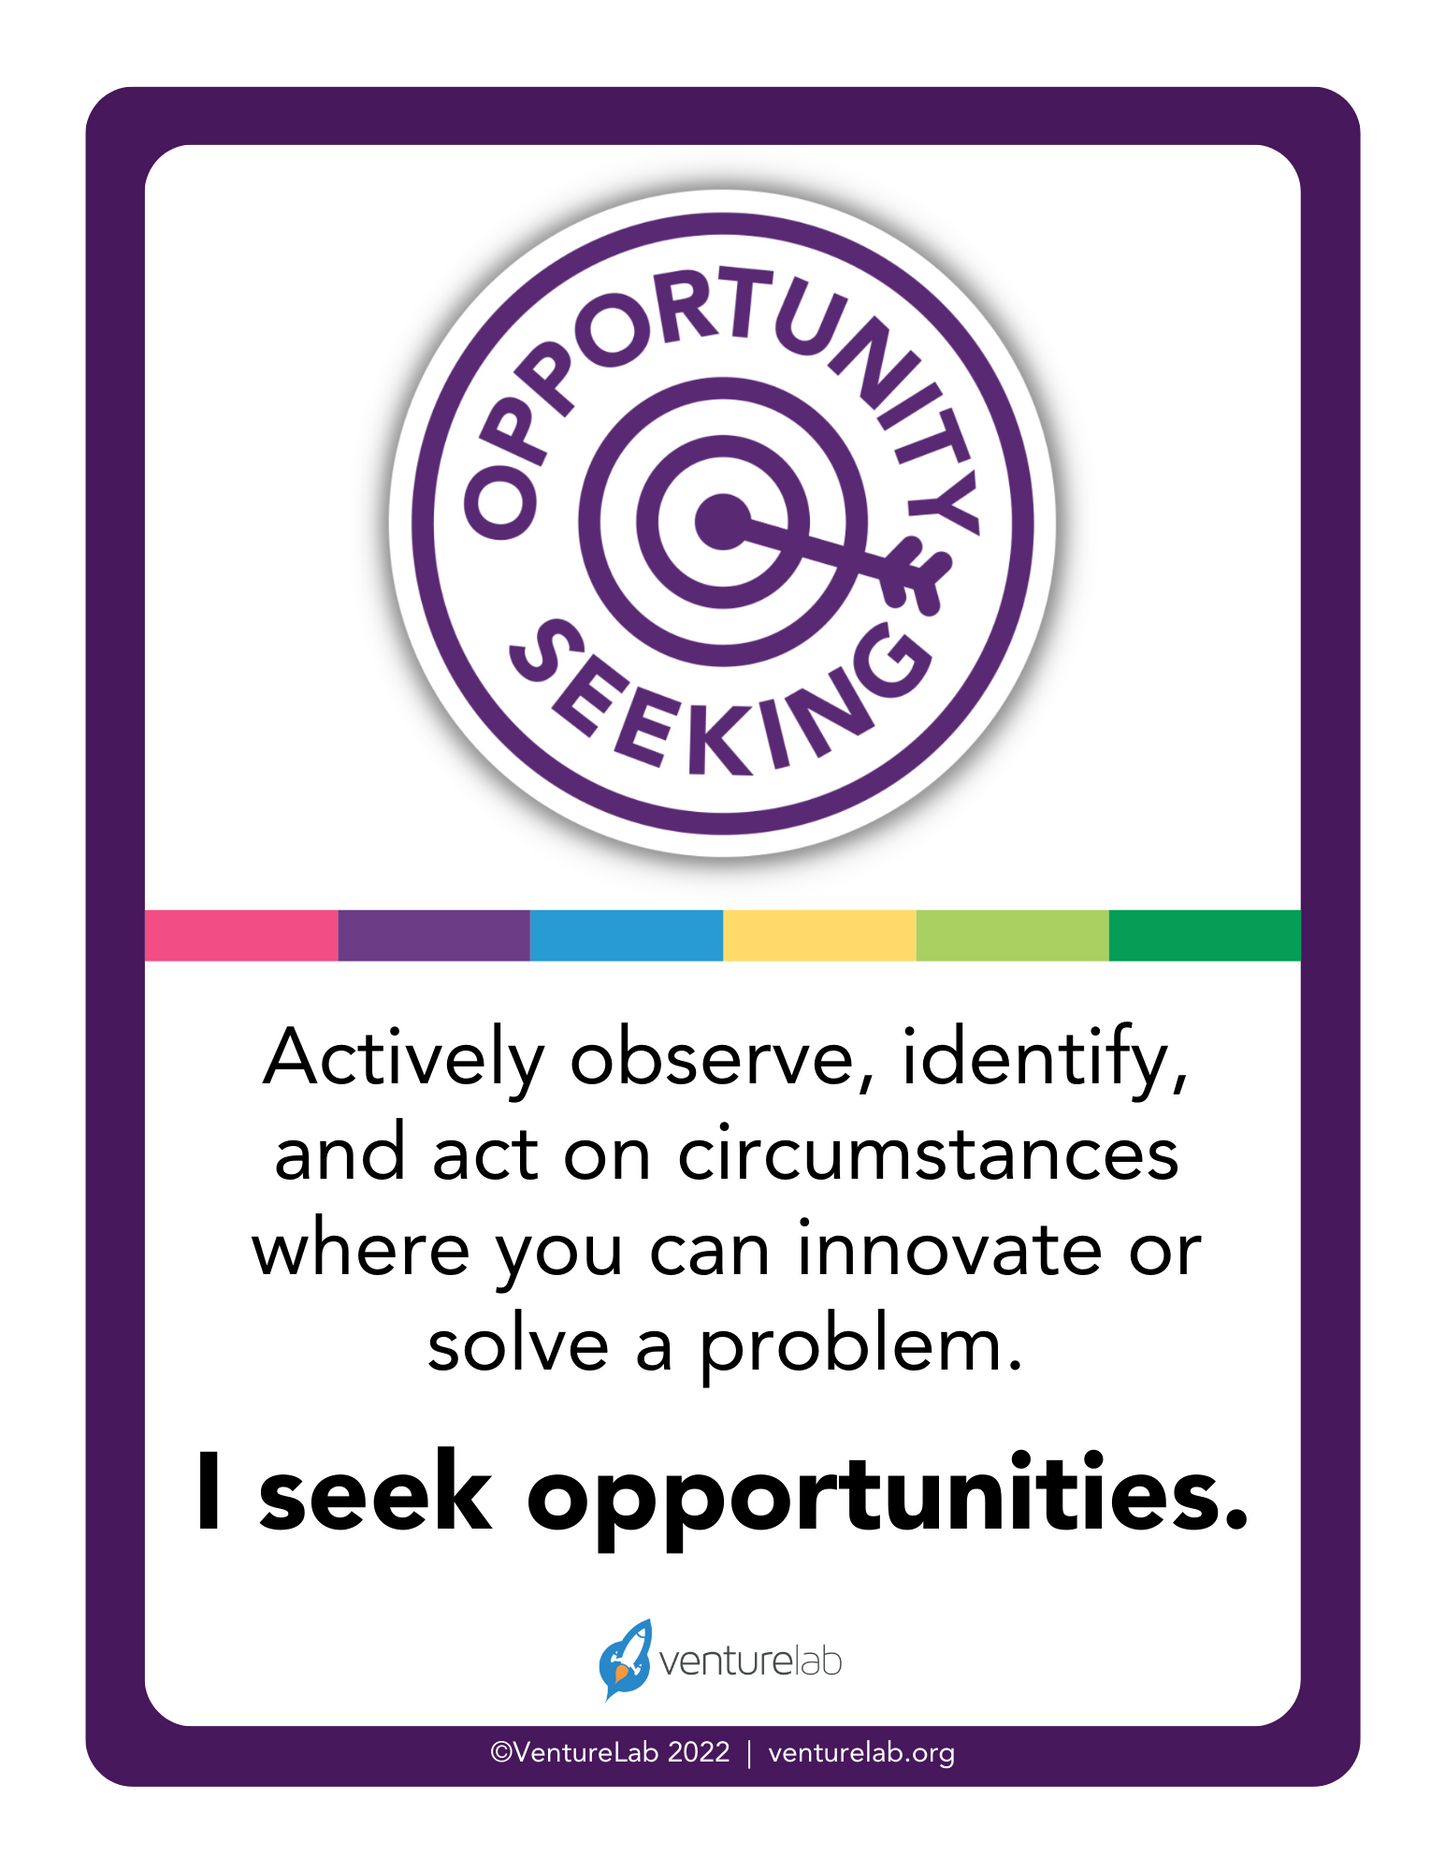 Opportunity Seeking Mindset Poster Grades 6-12